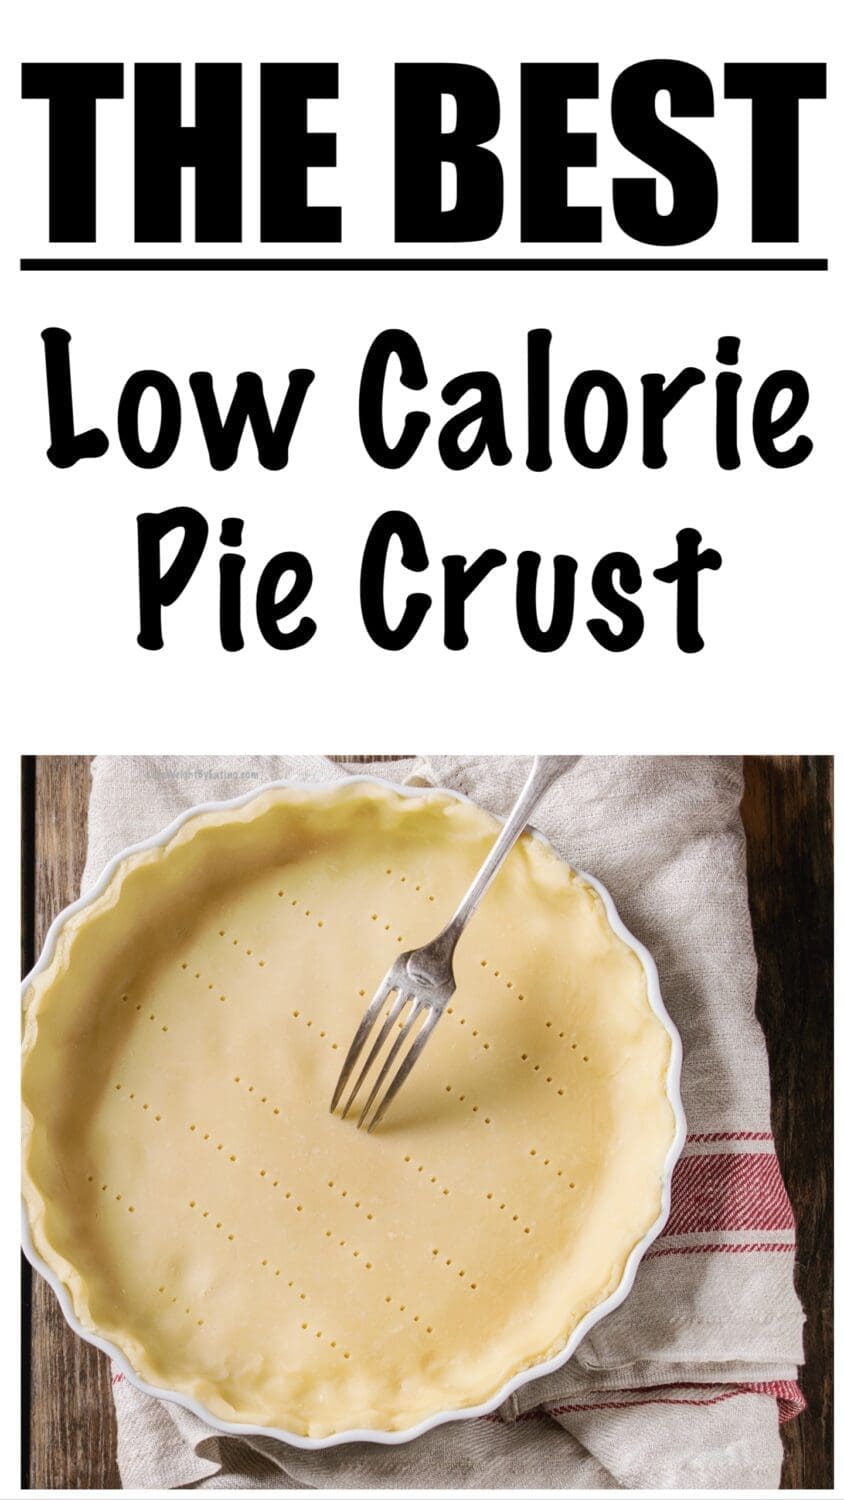 Low Calorie Pie Crust